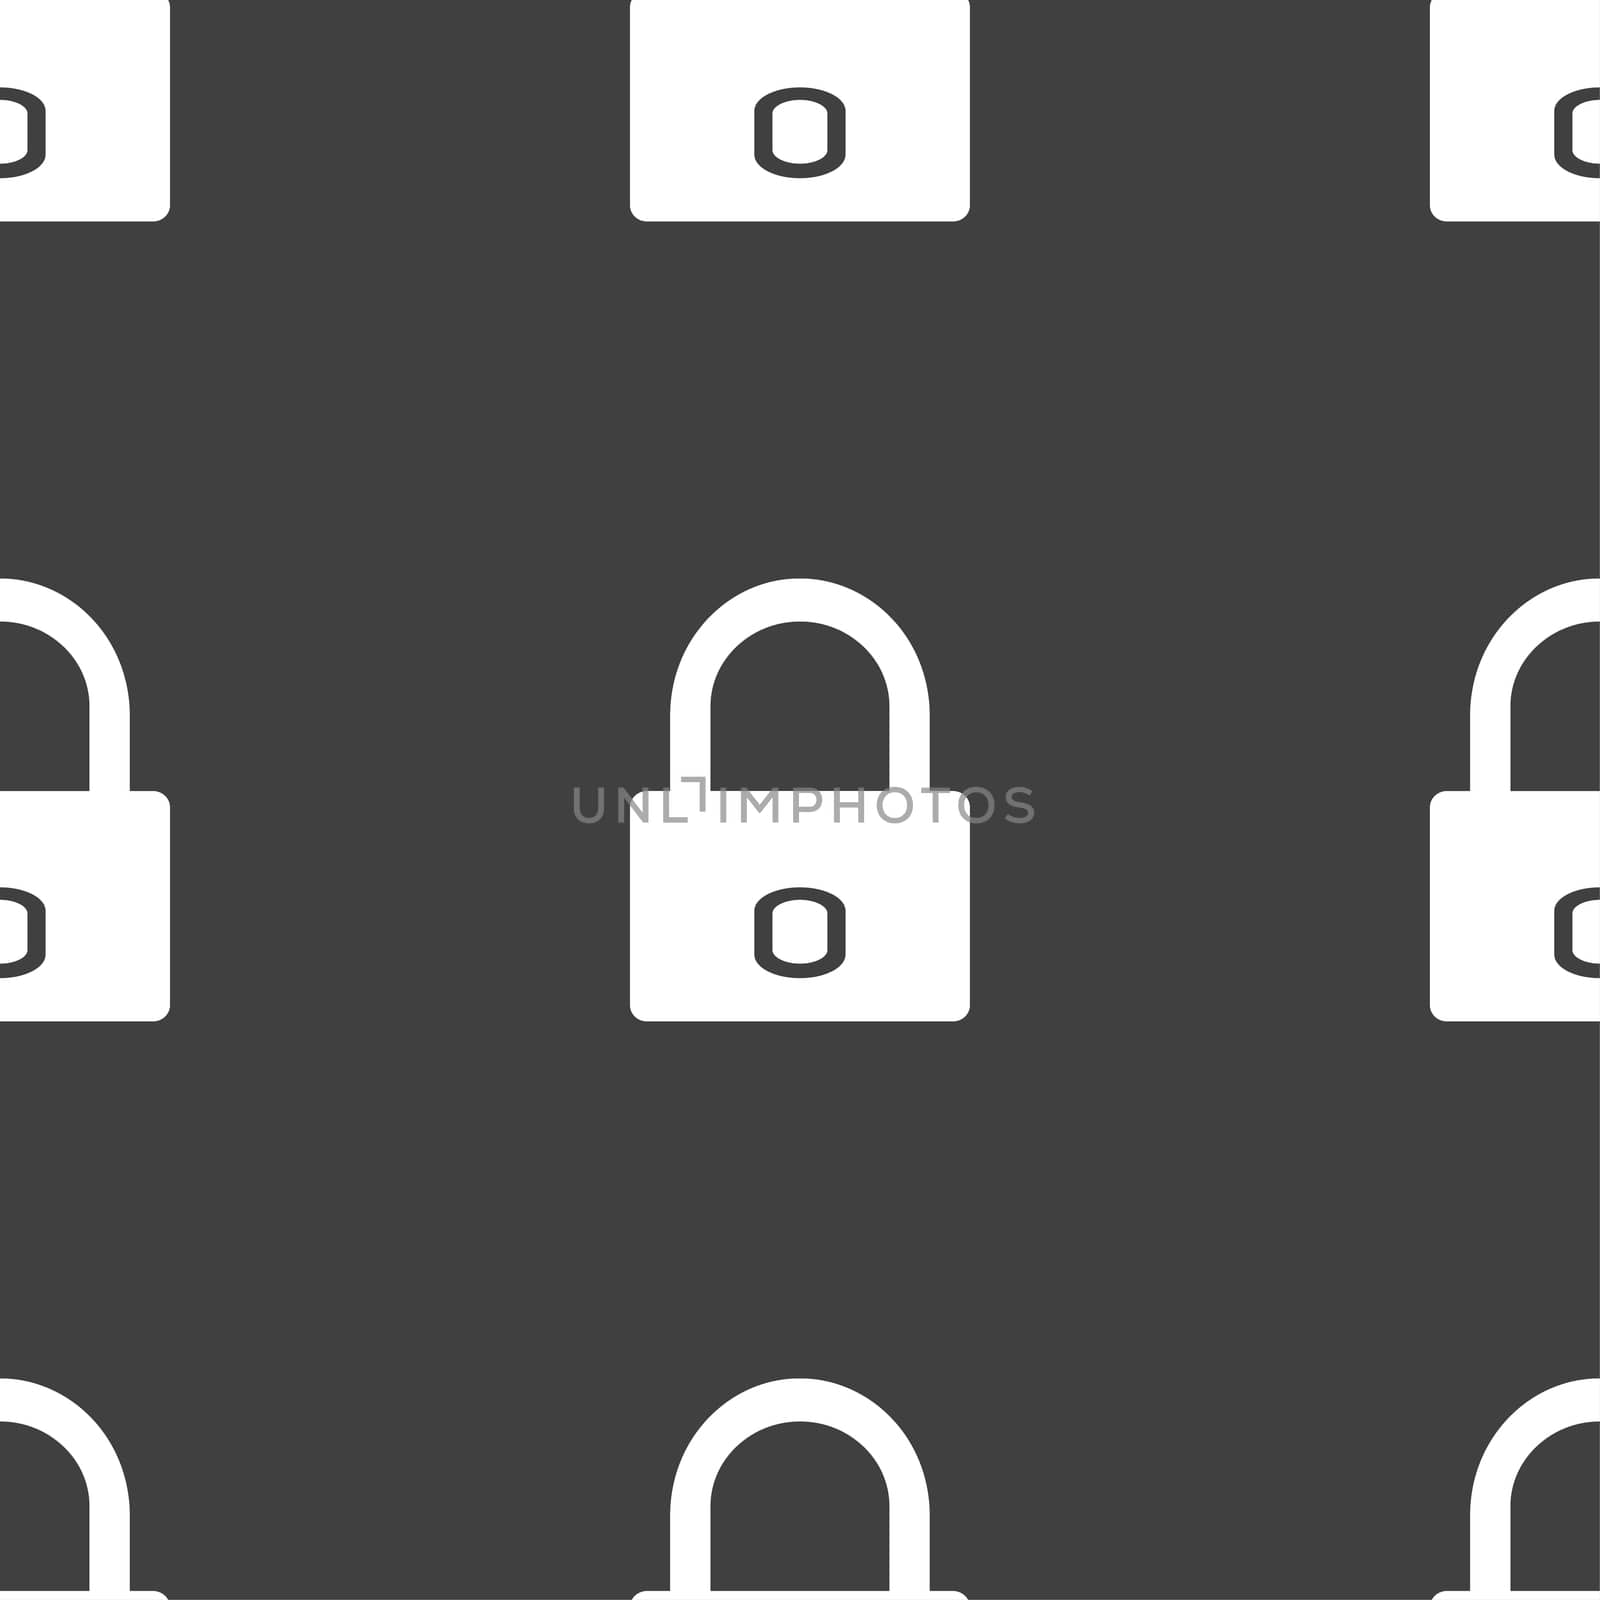 Lock sign icon. Locker symbol. Seamless pattern on a gray background. illustration